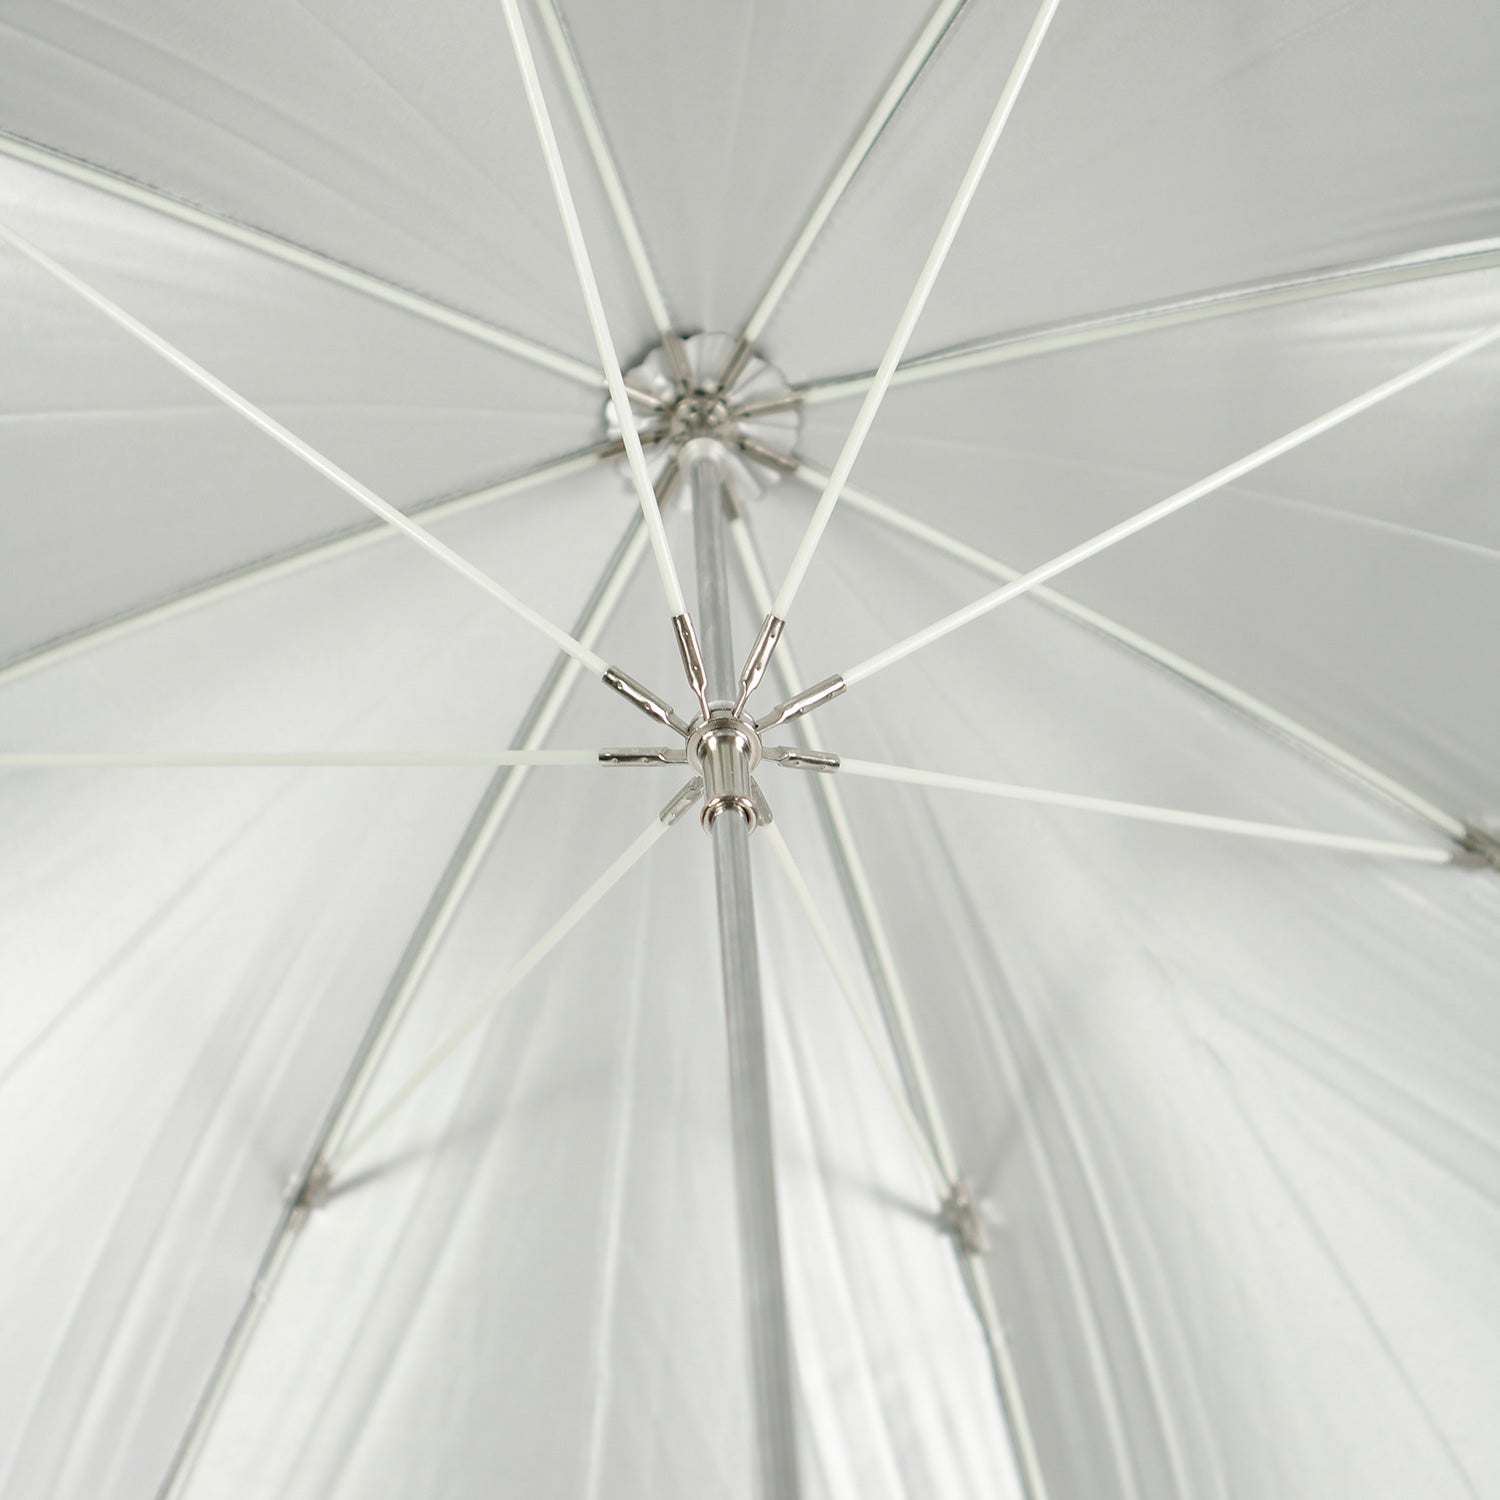 Standard Umbrella - Soft Silver Bounce (45")